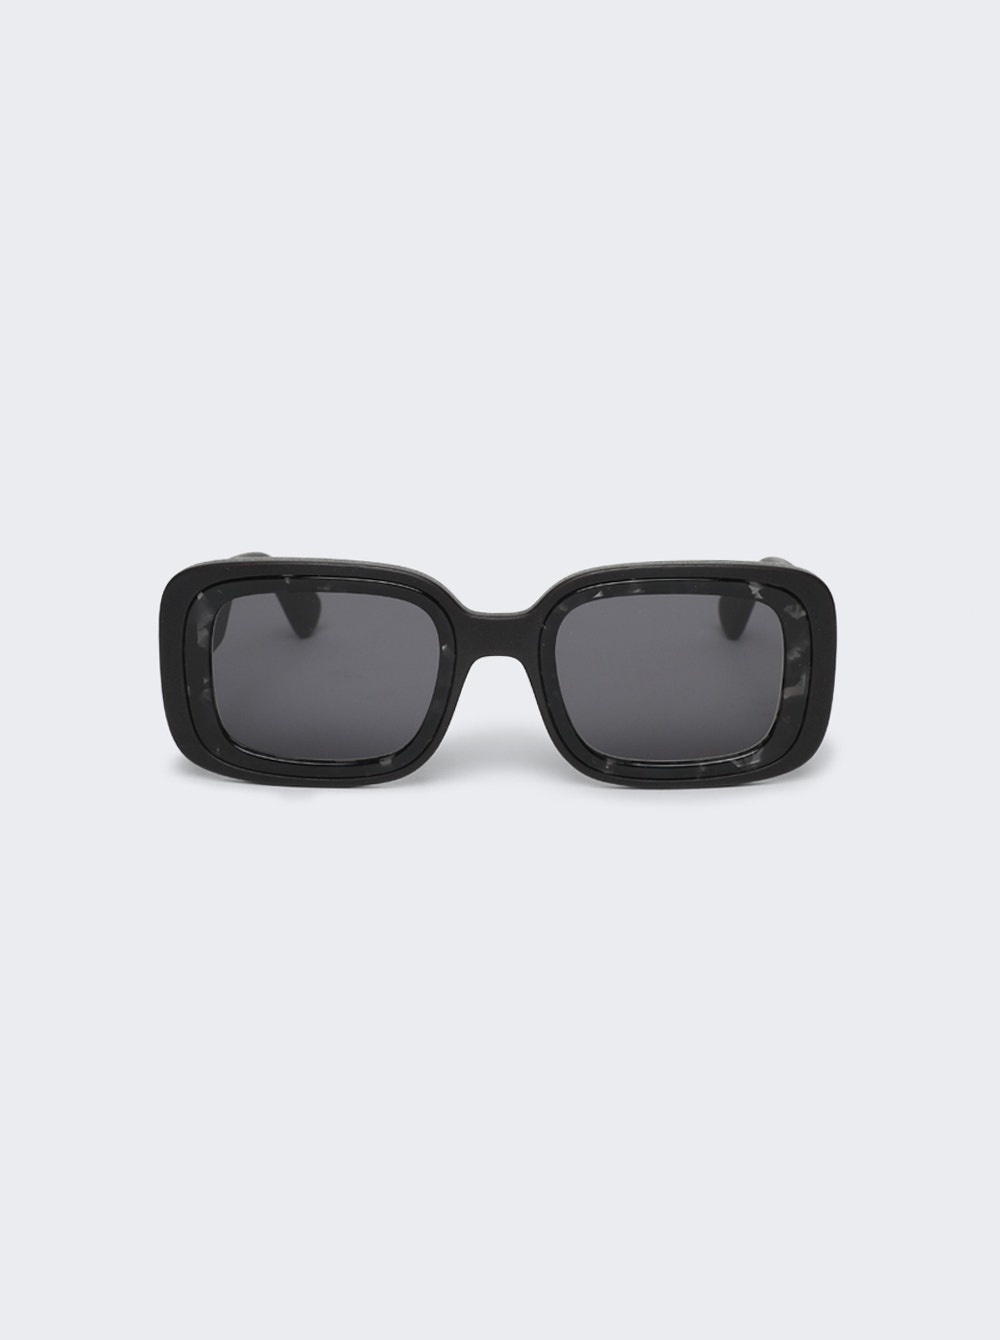 Studio 13.1 Sunglasses Pitch Black and Black Havana - 1